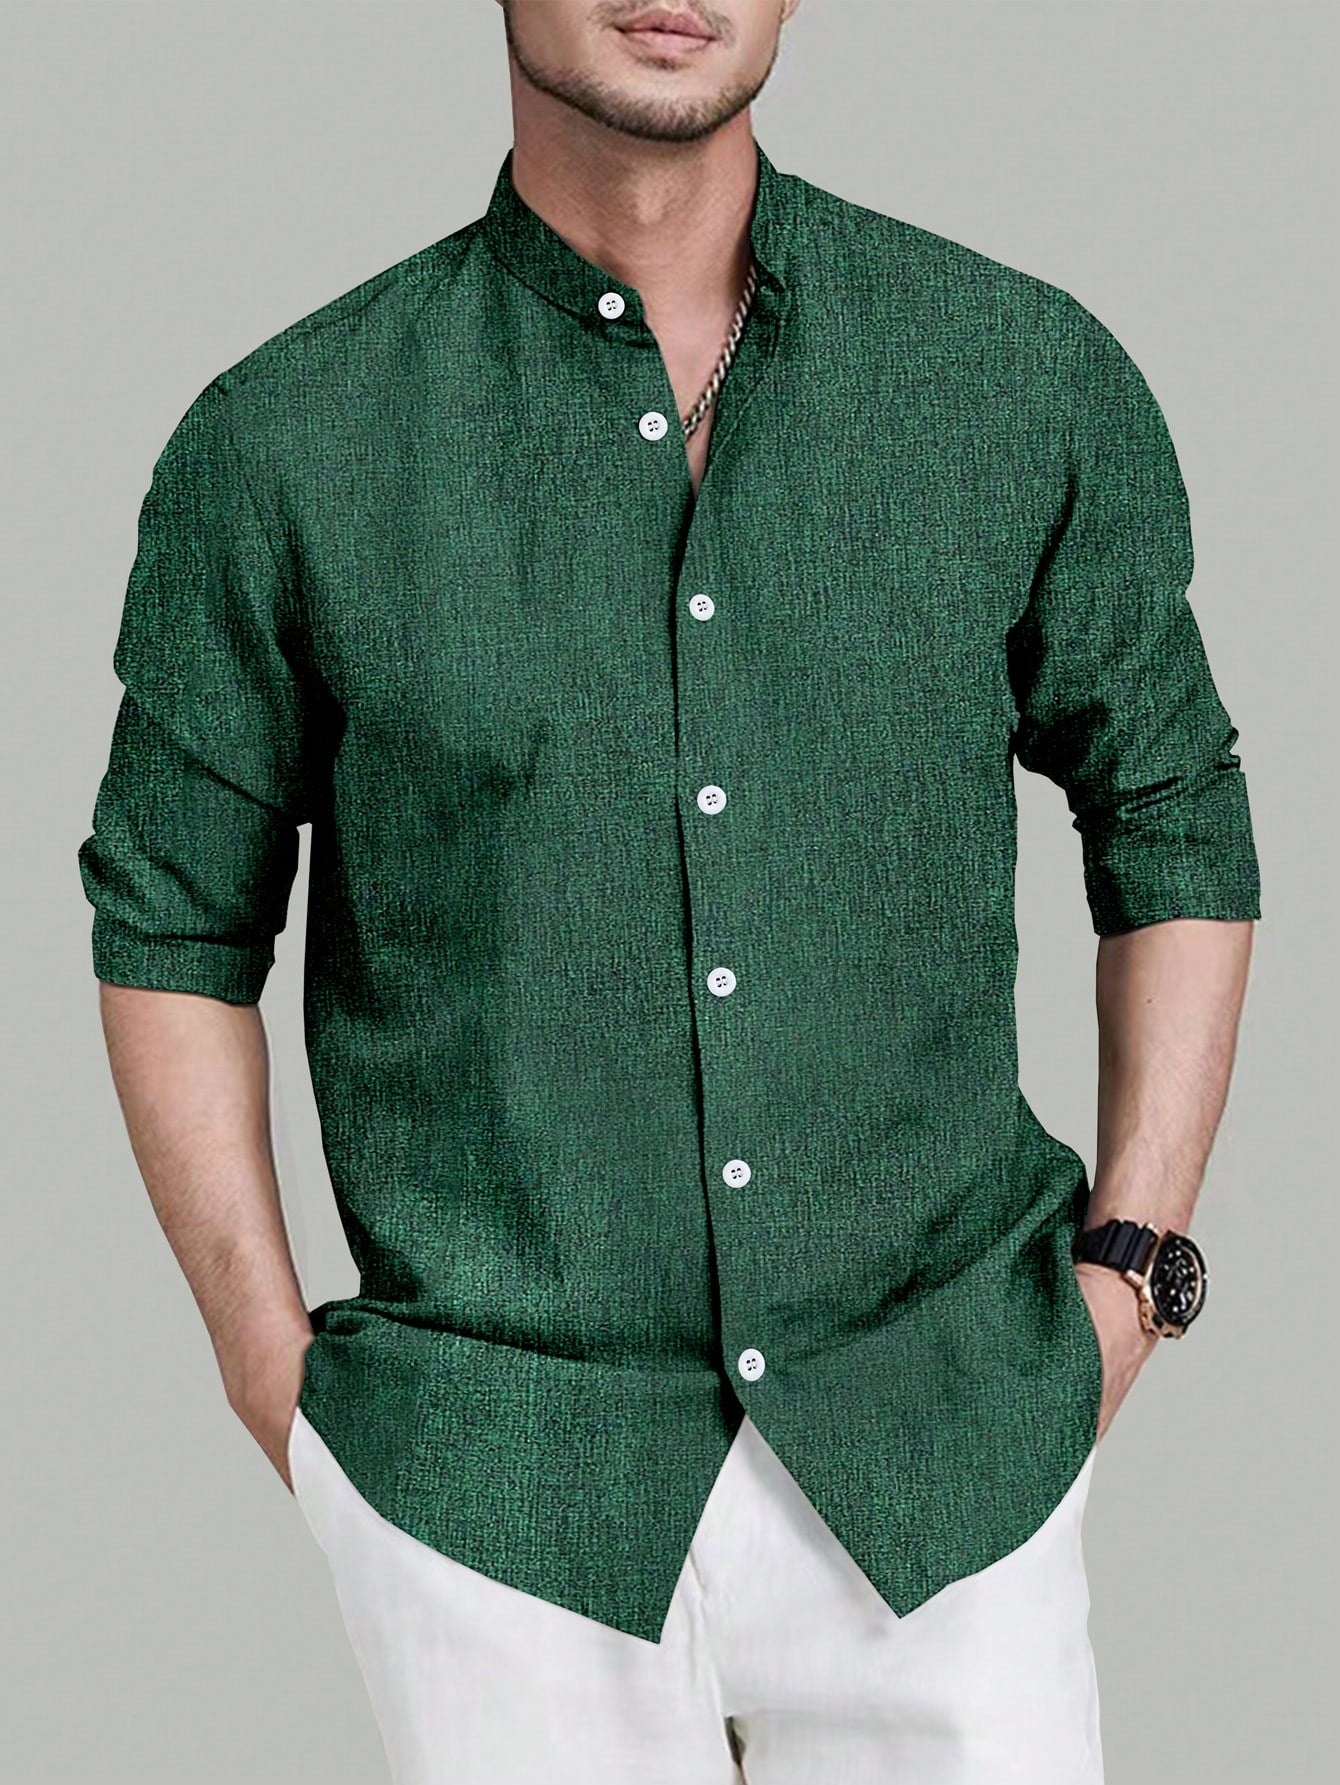 Men's Spring/Summer Casual Stand Collar Long Sleeve Shirt